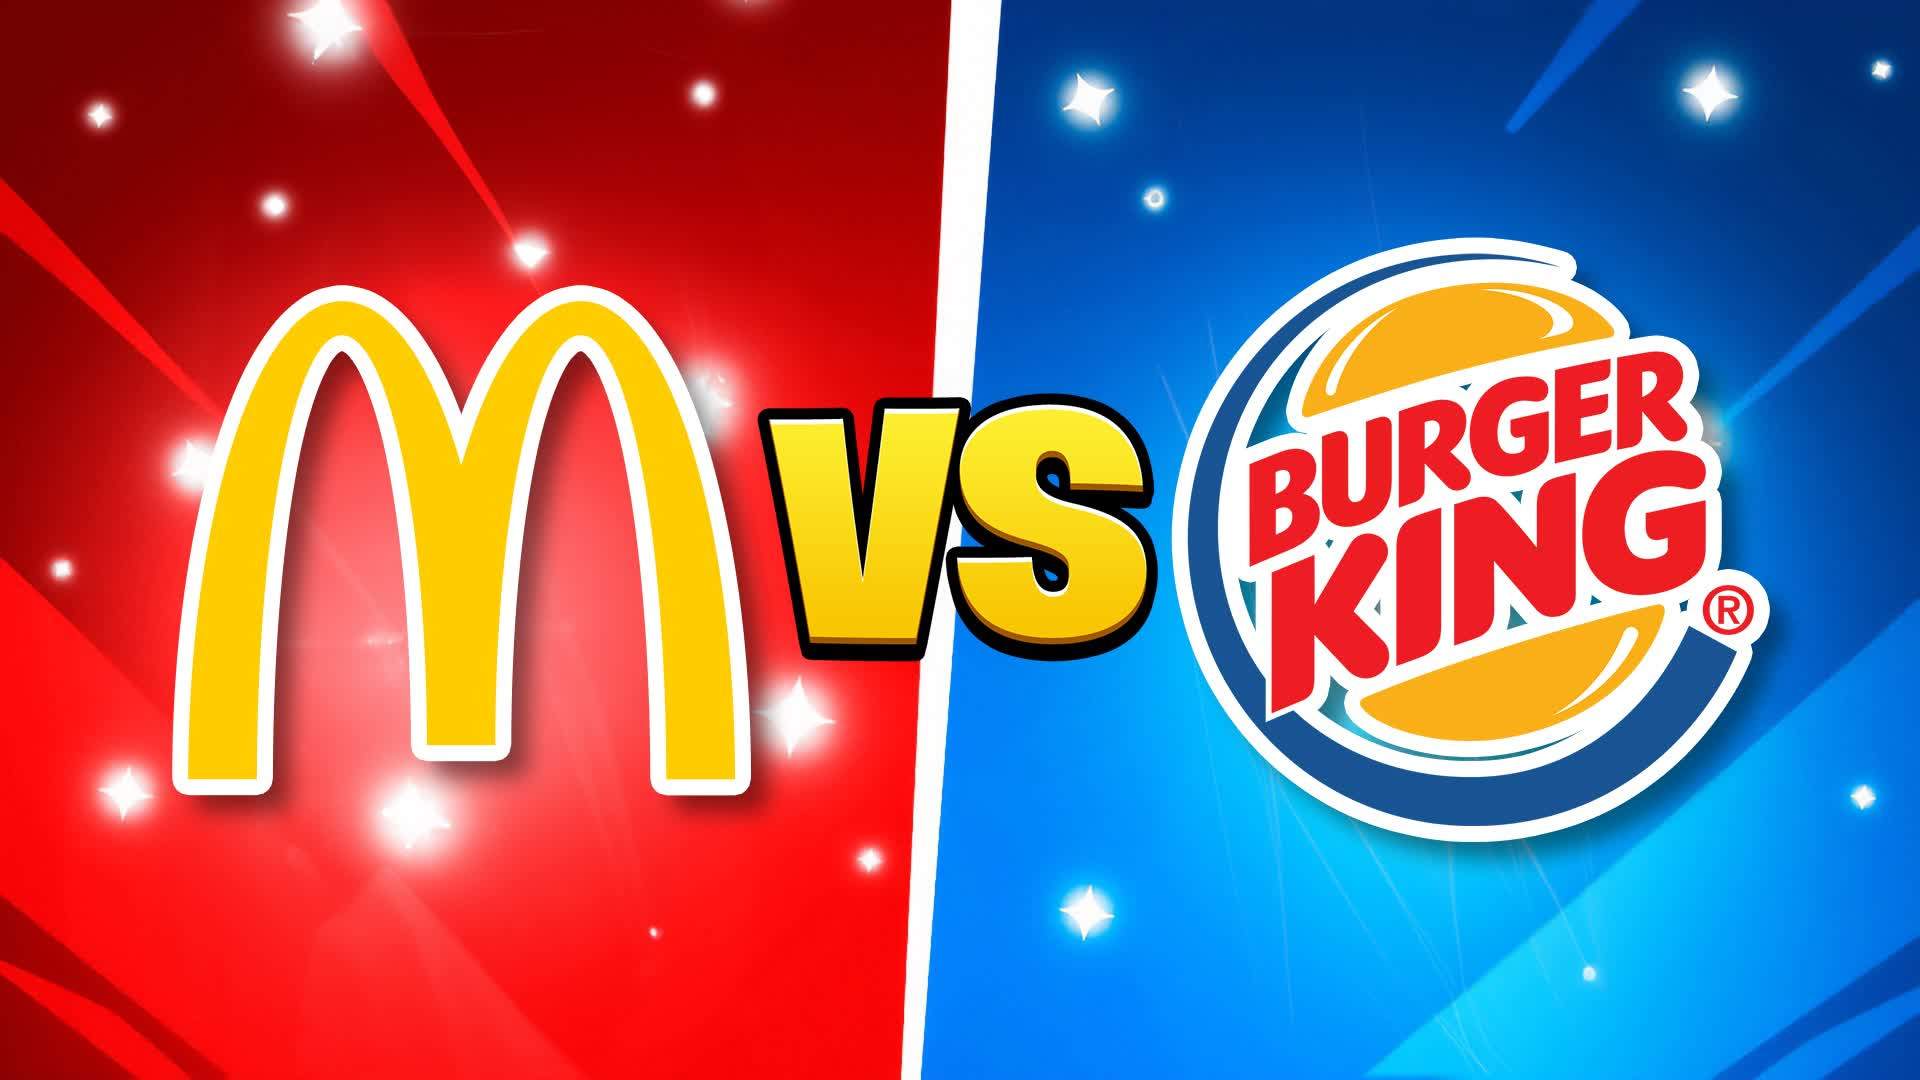 🍔 McDonald's vs Burger King 🍔